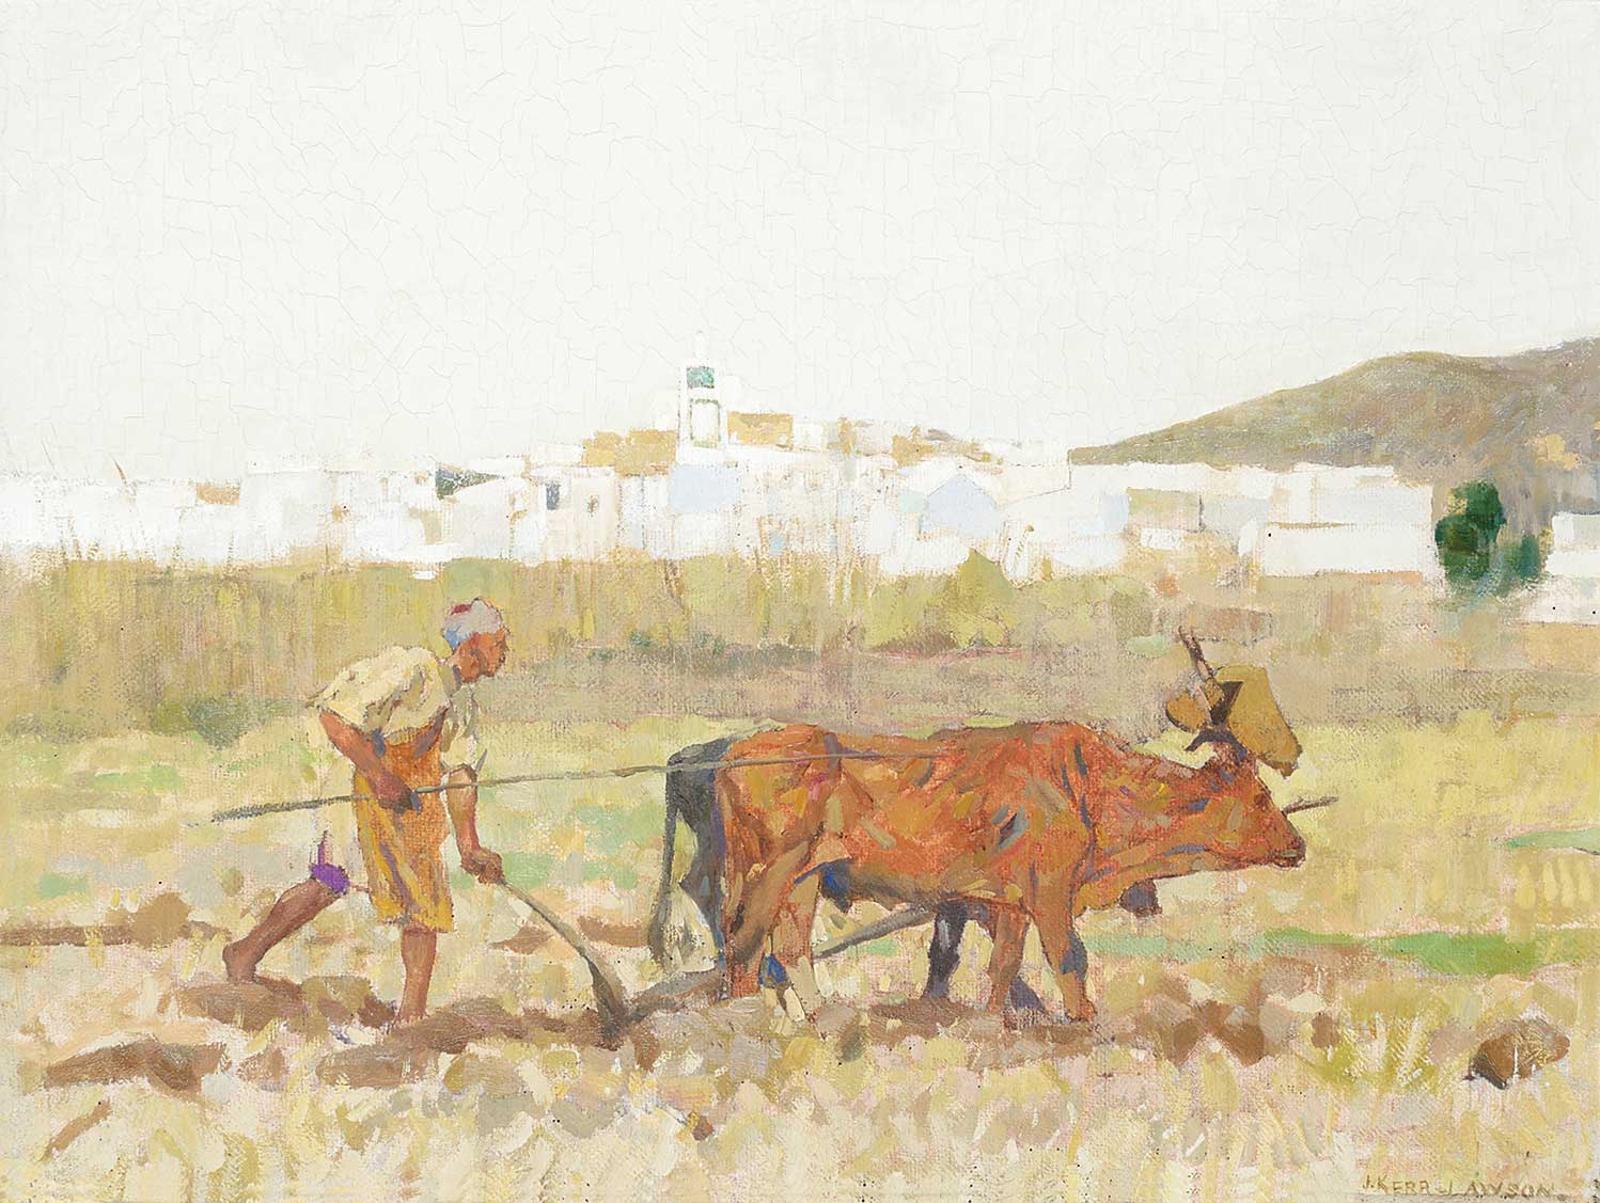 James Kerr-Lawson (1864-1939) - Untitled - Plowing the Field